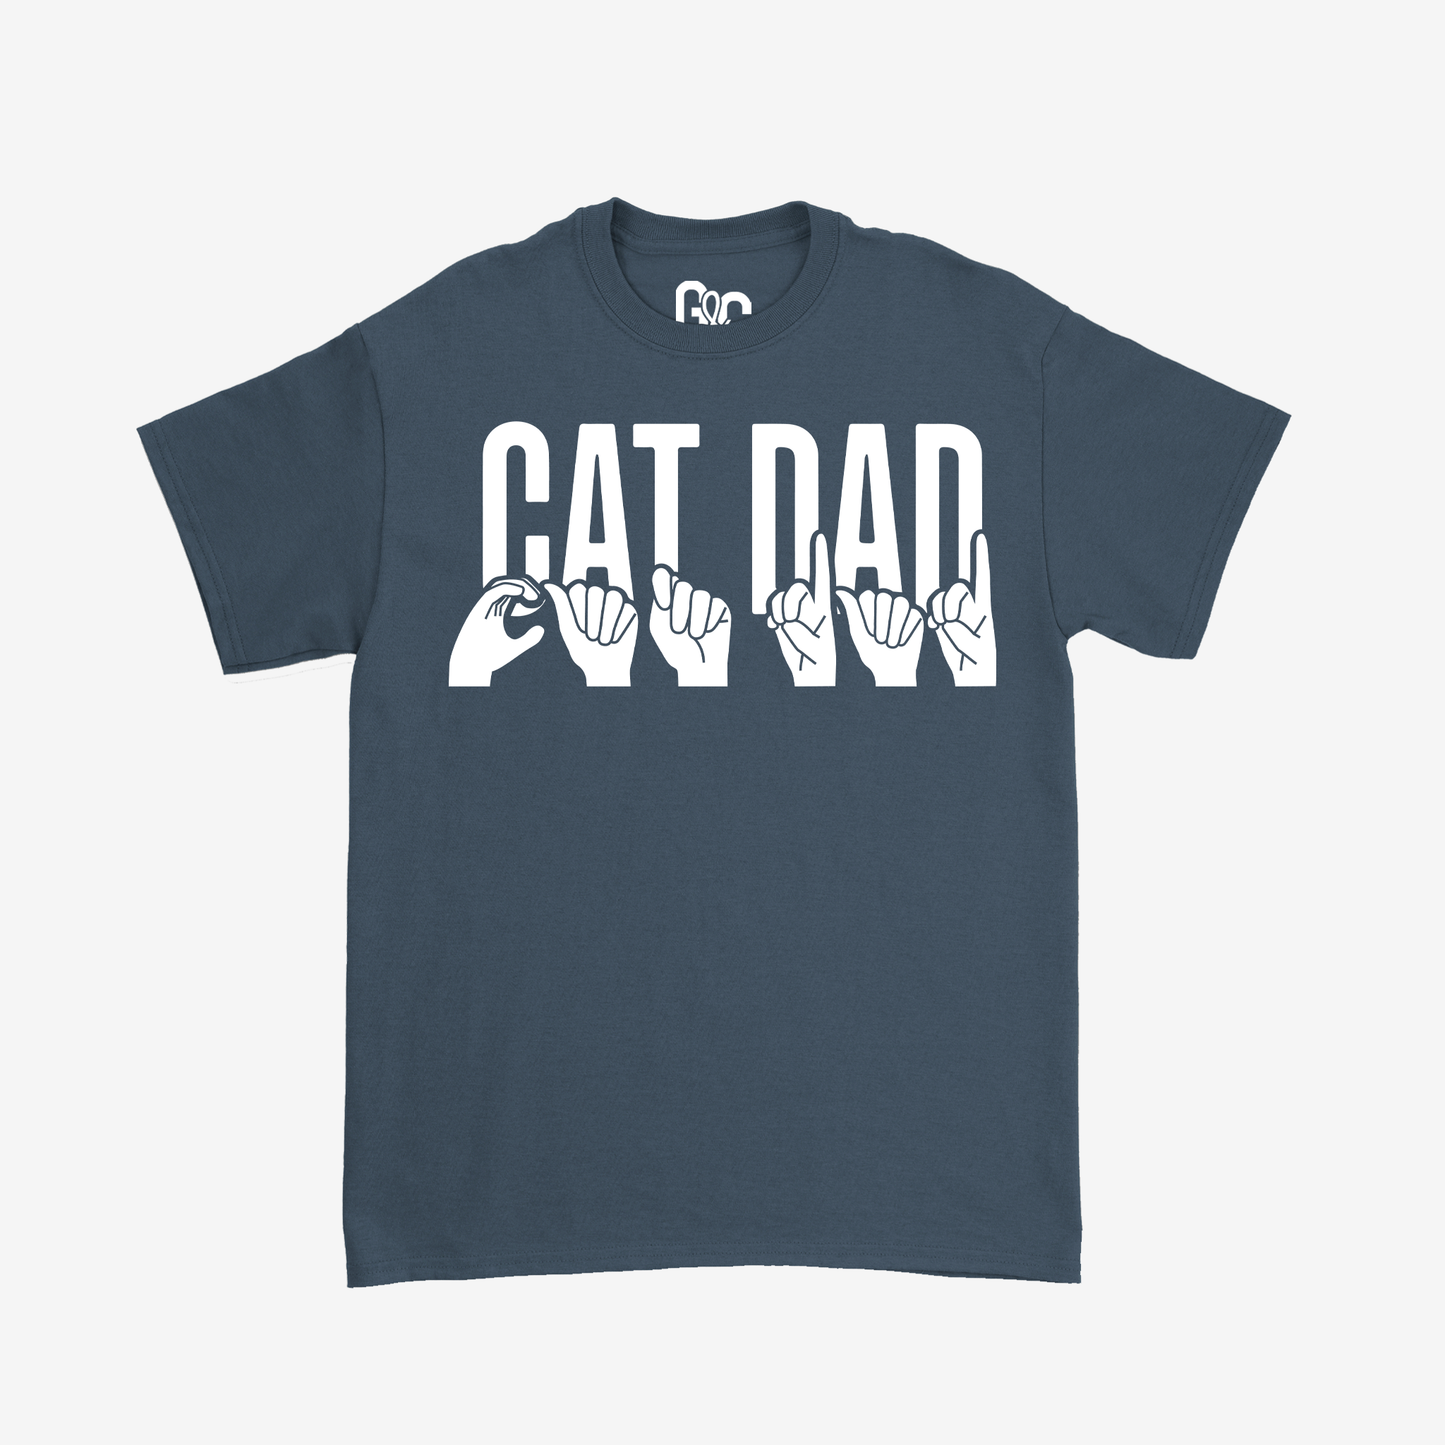 Cat Dad Tee